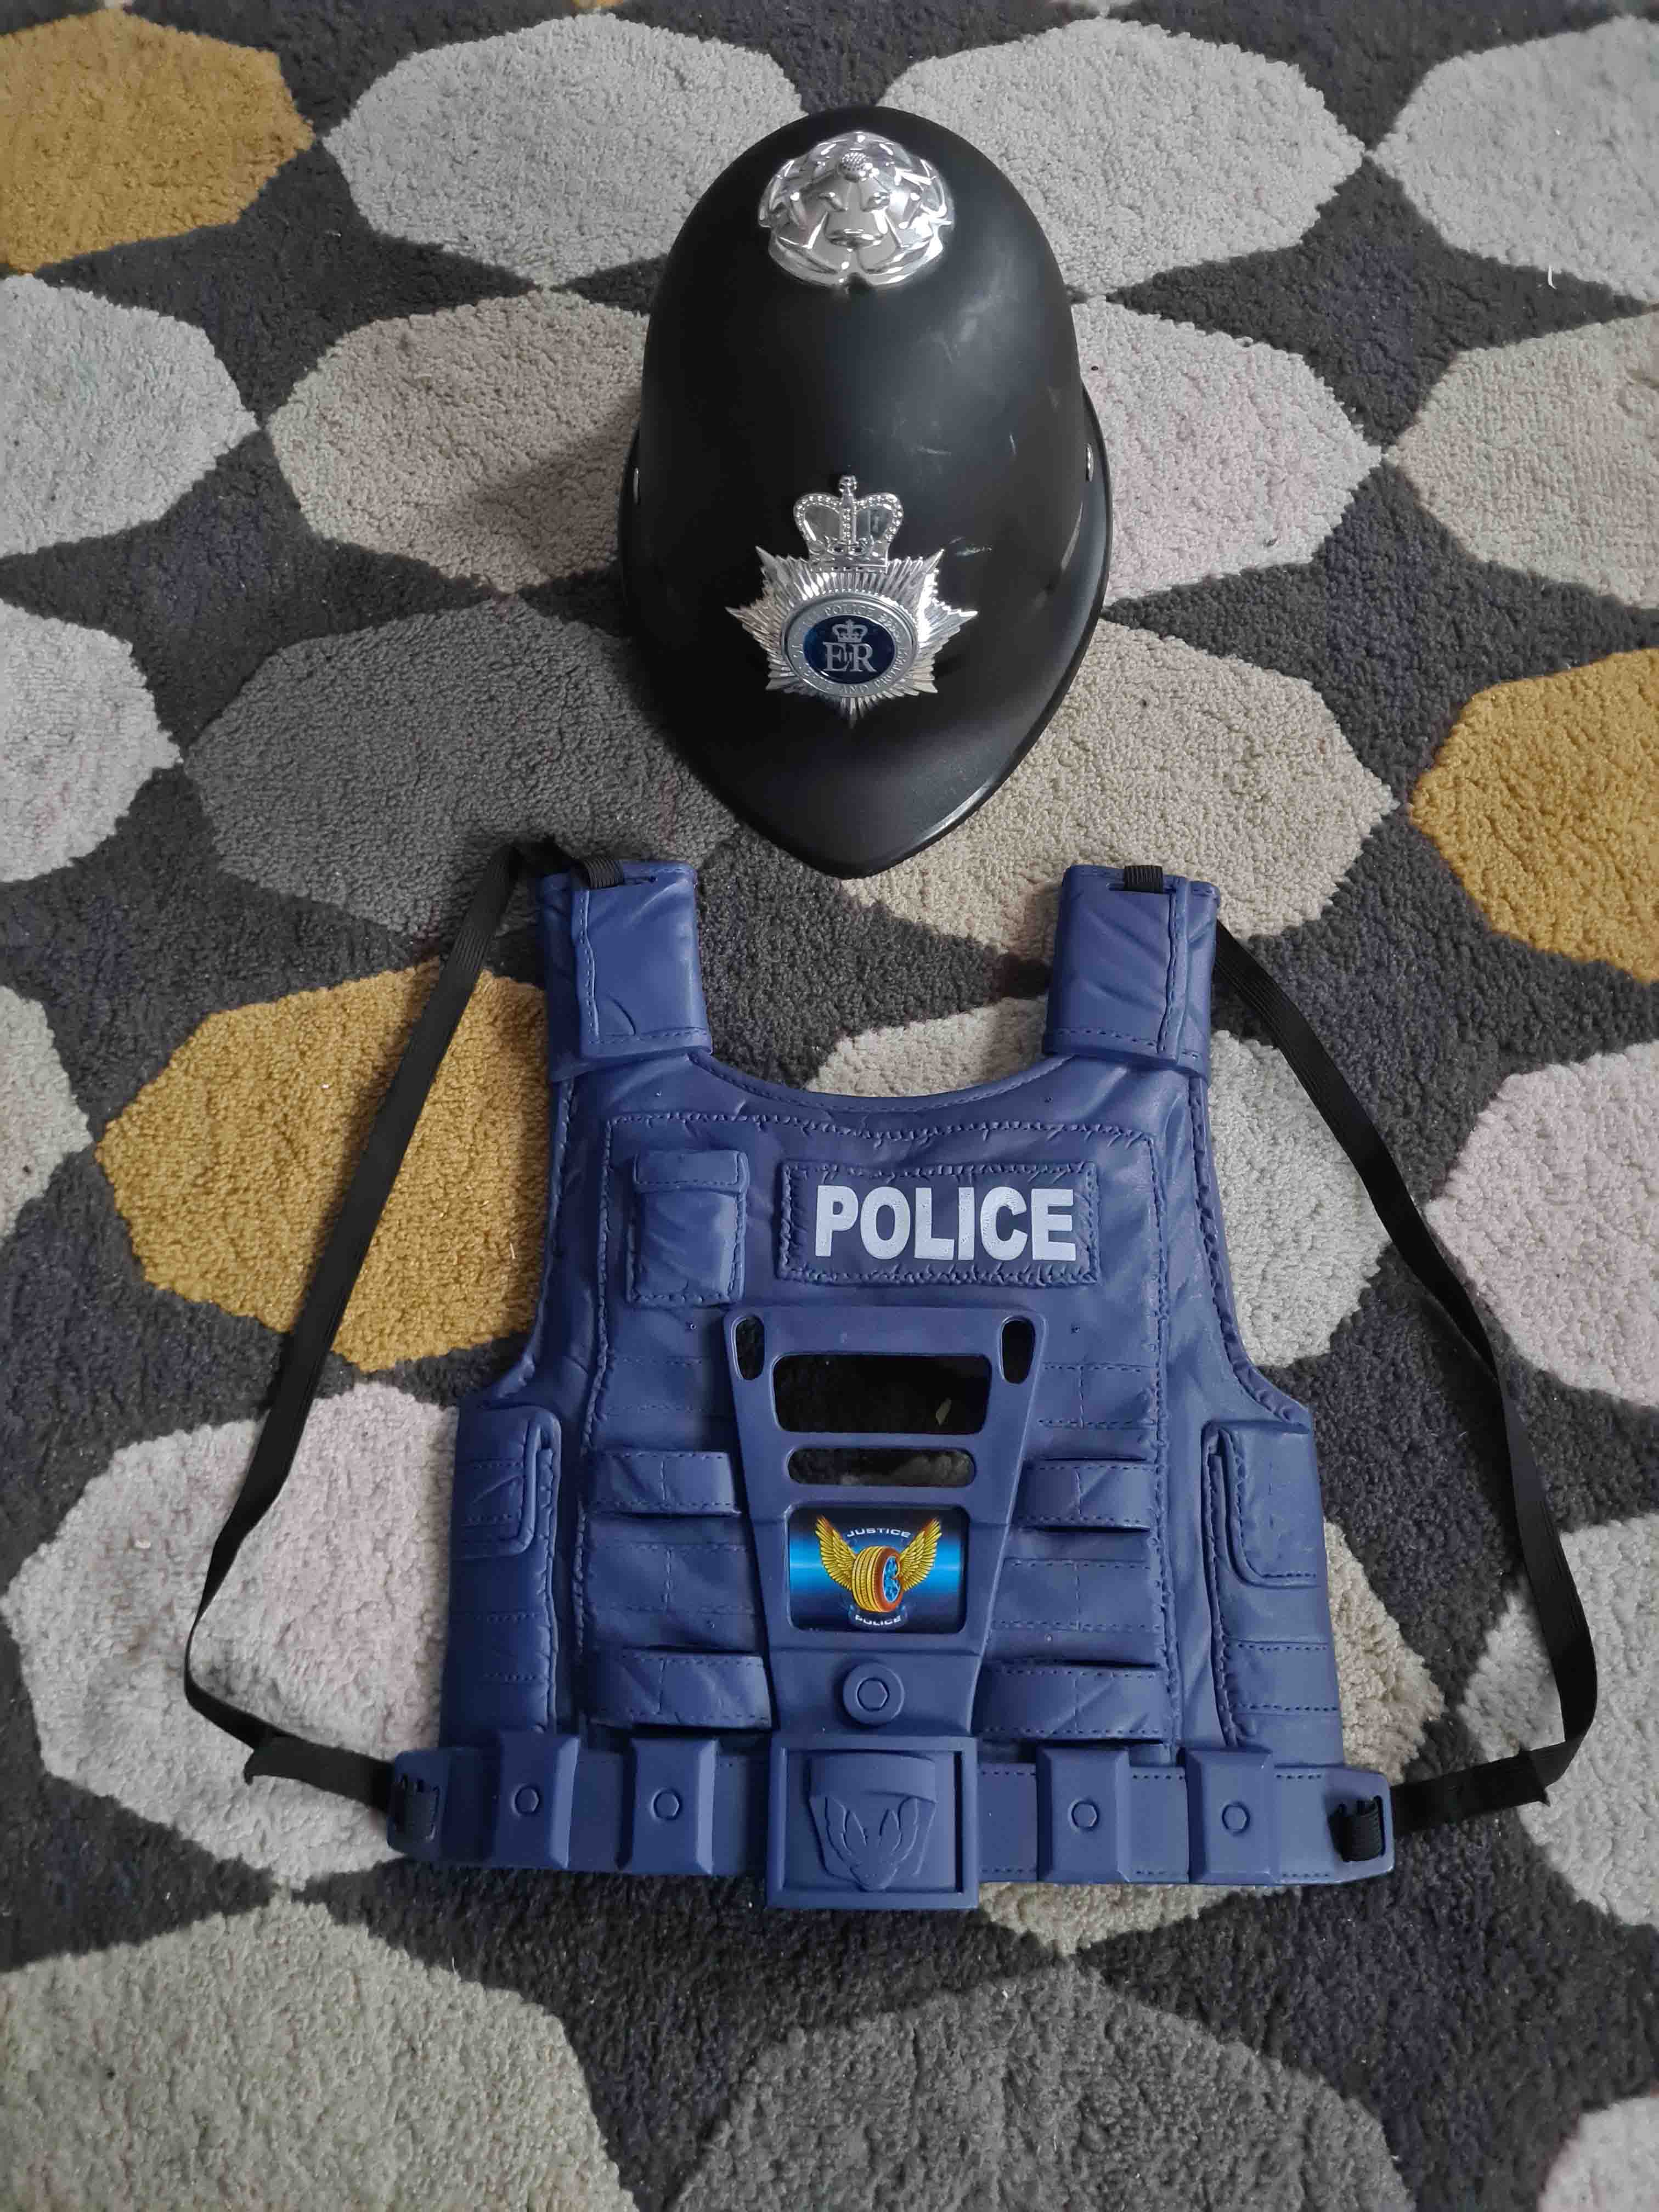 Police Helmet & Vest